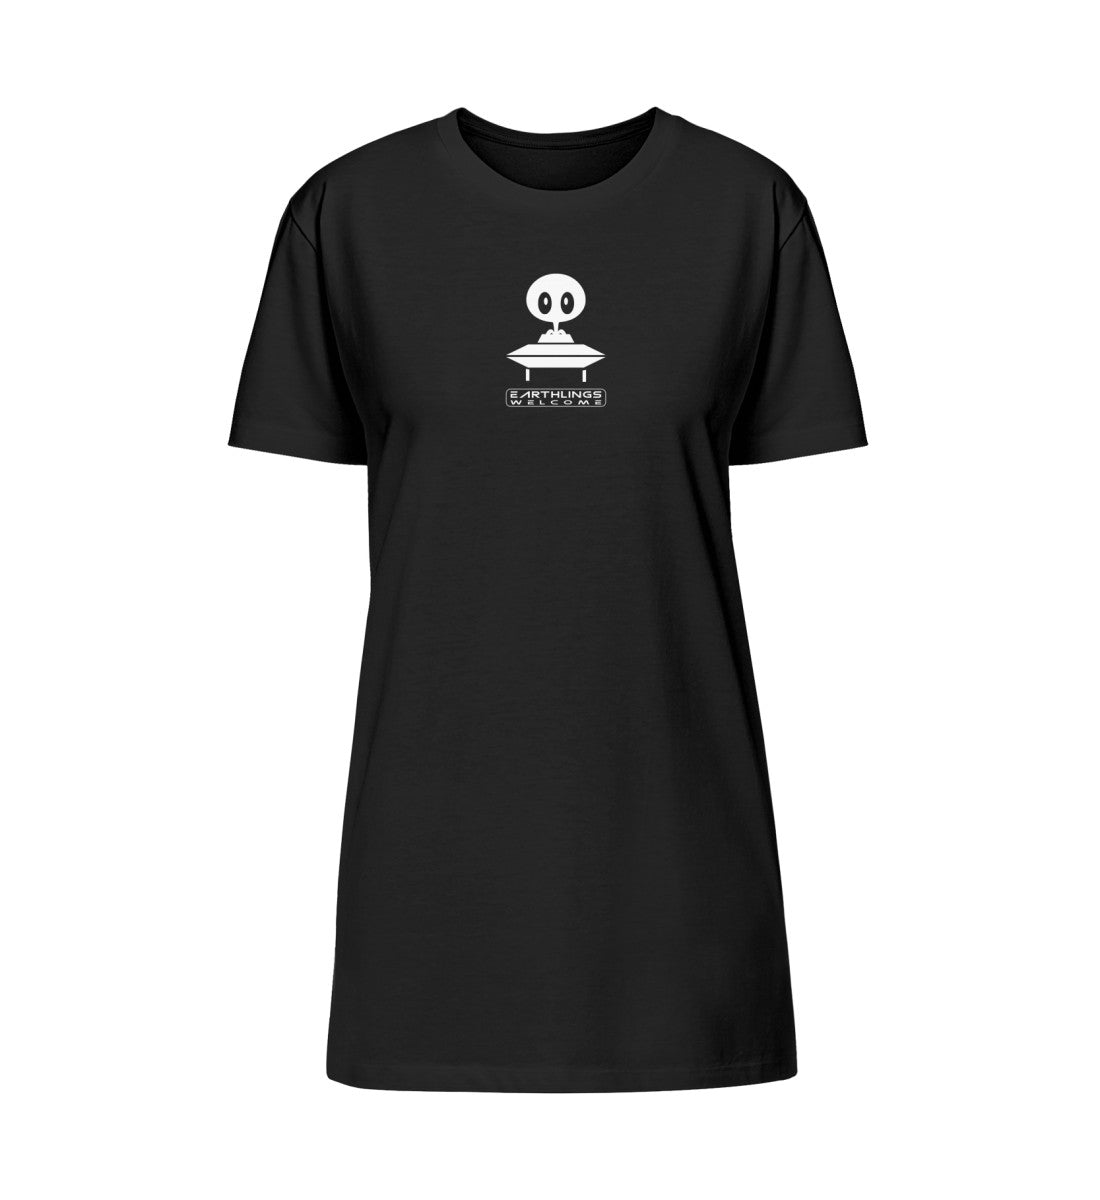 Schwarzes T-Shirt Kleid mit Design Druck der Roger Rockawoo Kollektion earthlings welcome